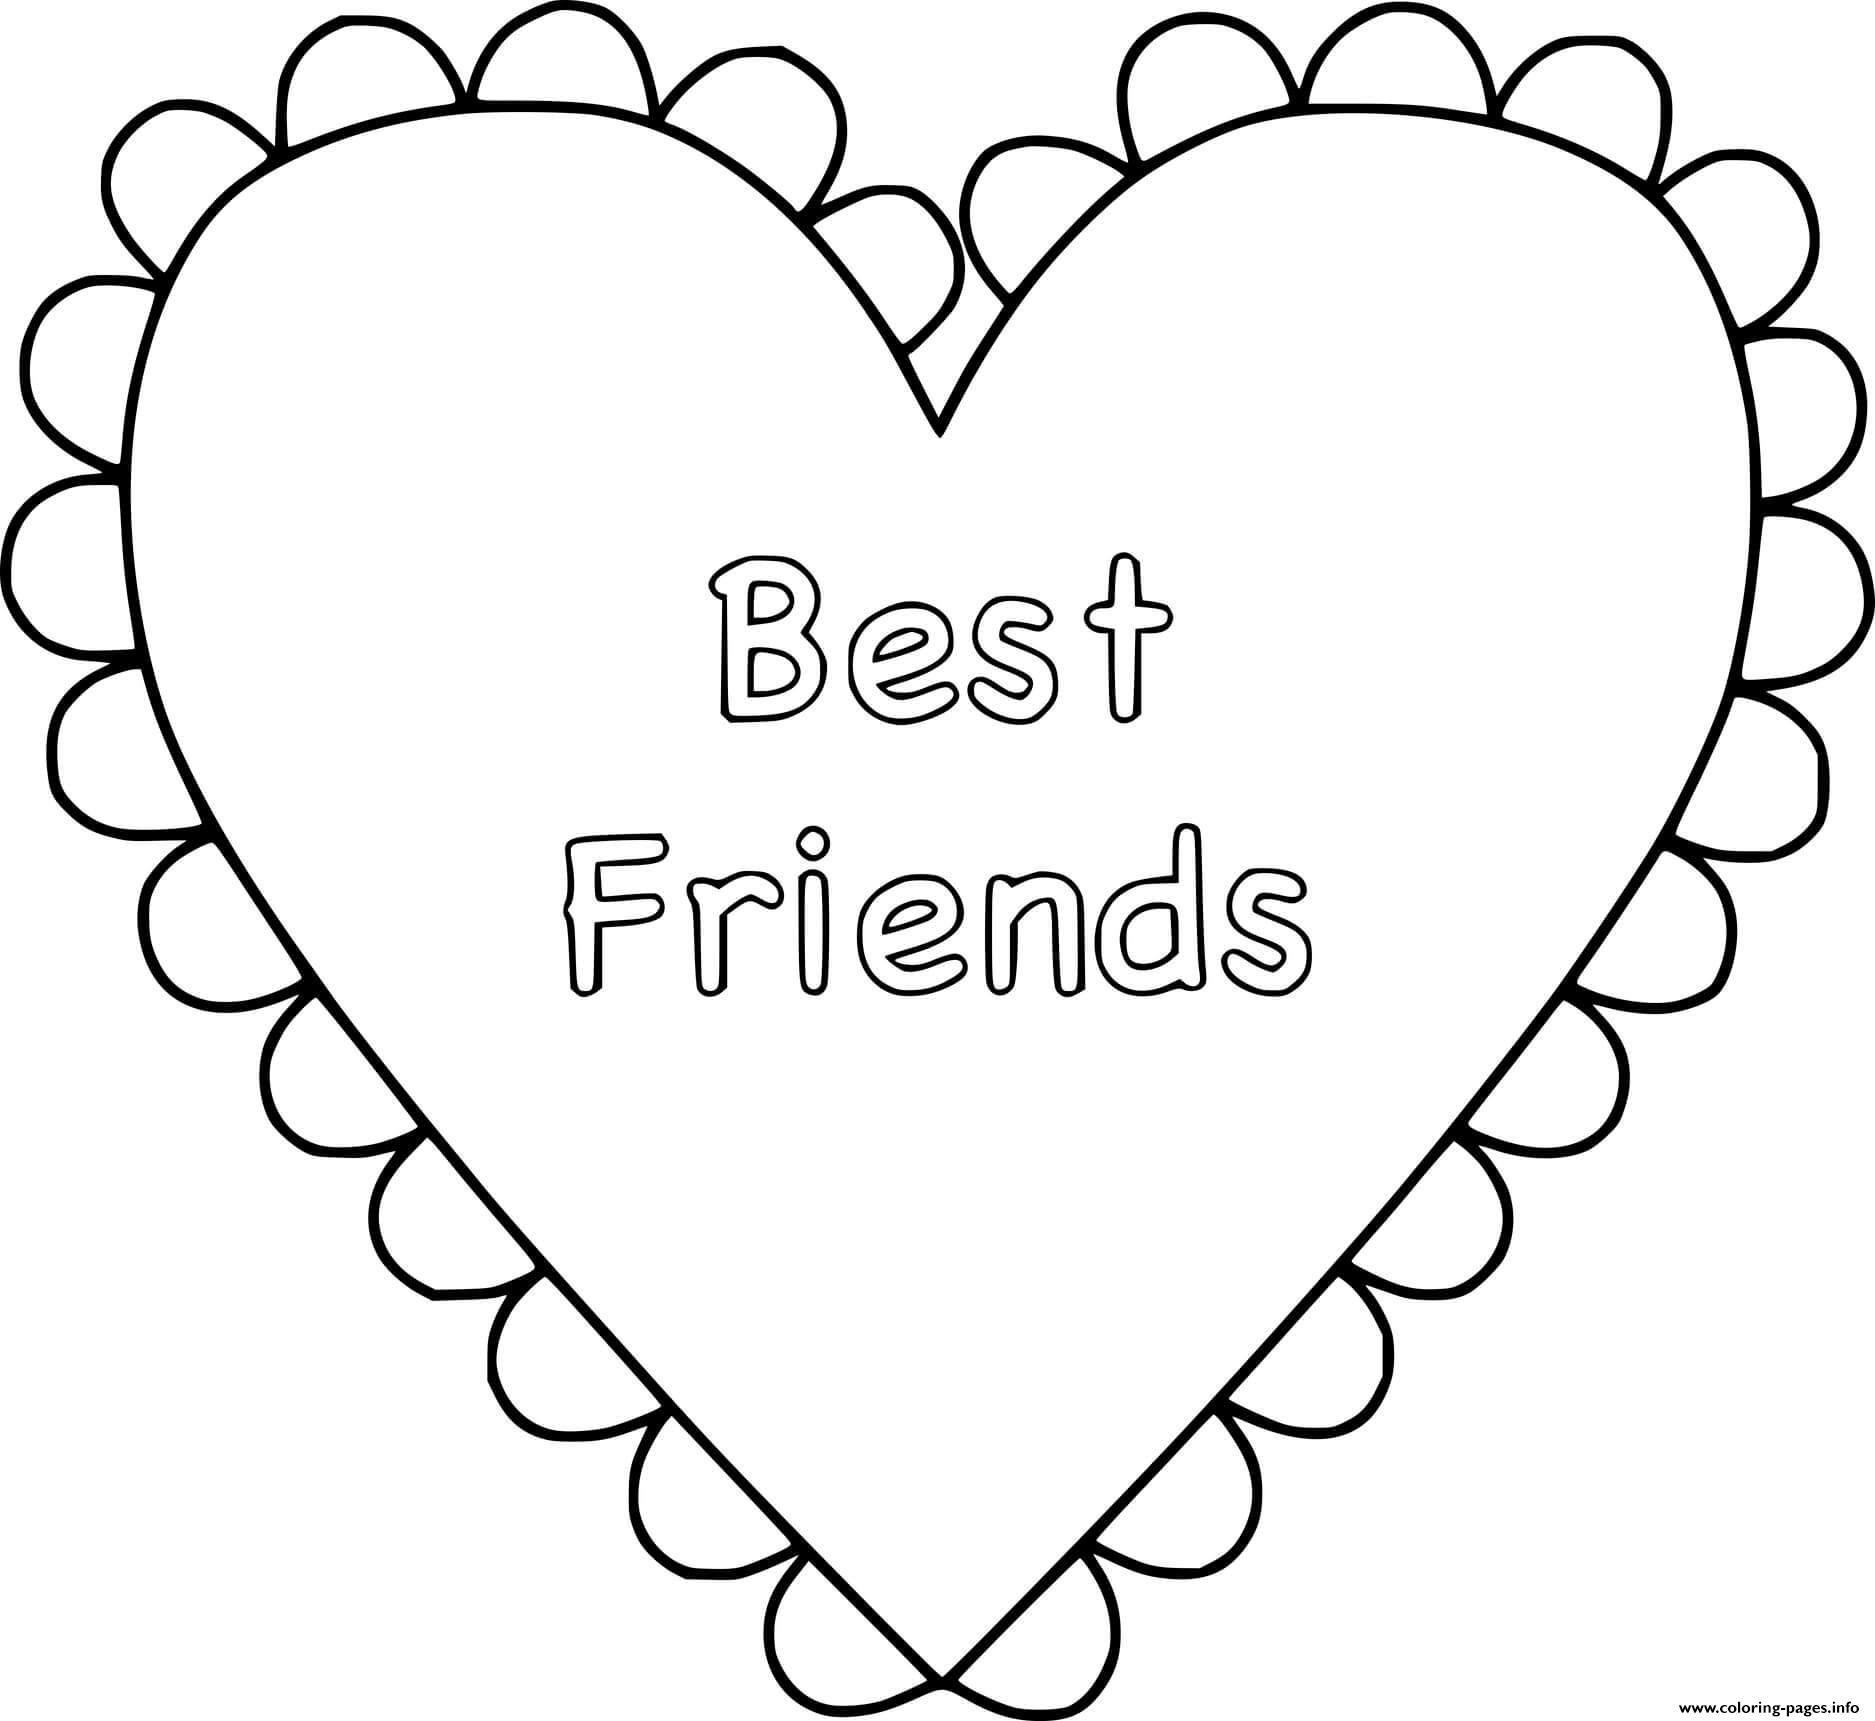 Best Friends Heart coloring